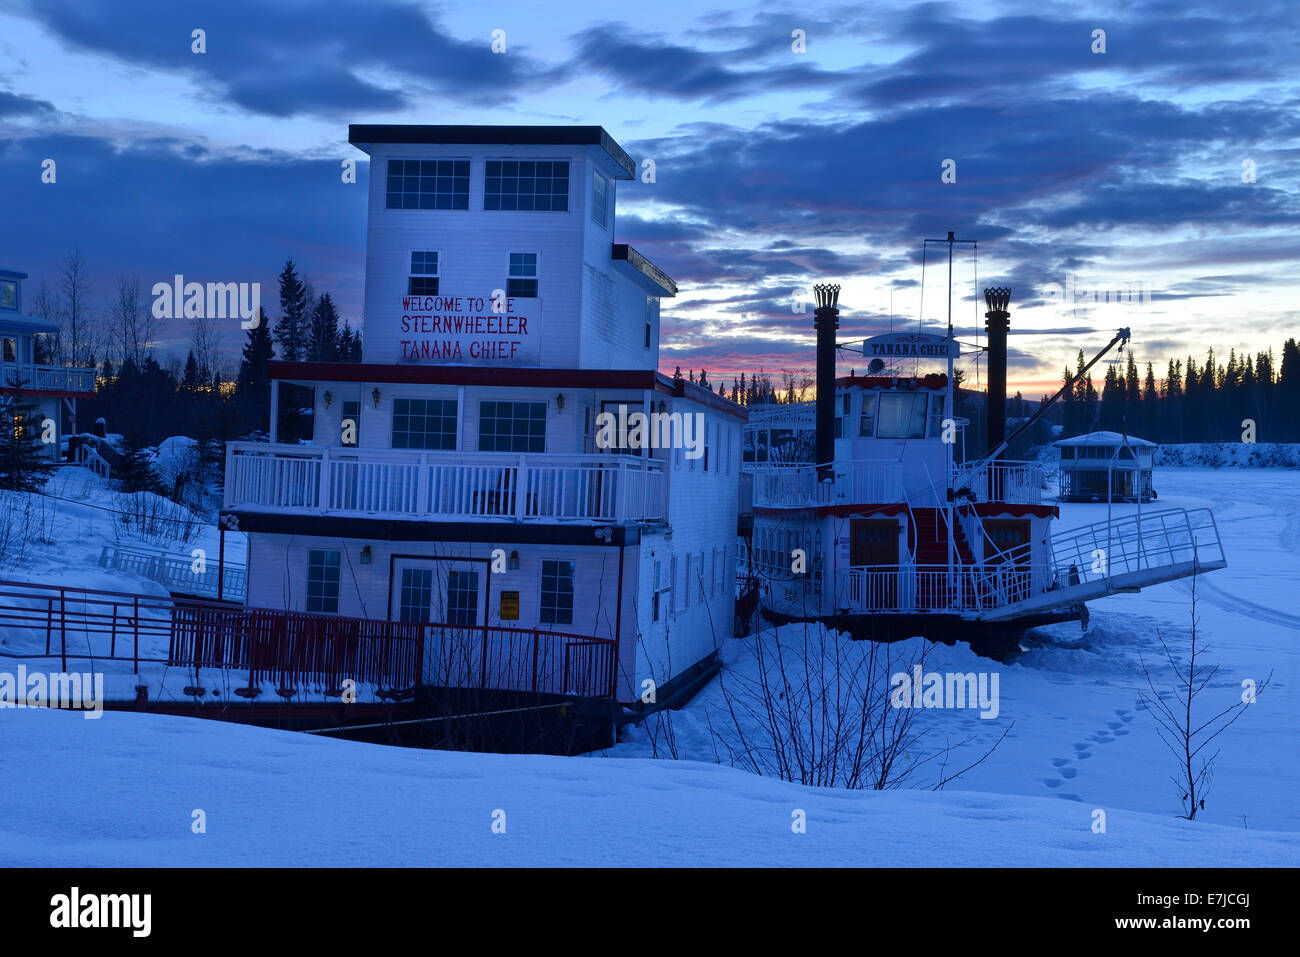 USA, United States, America, Alaska, Fairbanks, Tanana Chief, Sternwheeler, ship, frozen river, winter, gold rush Stock Photo